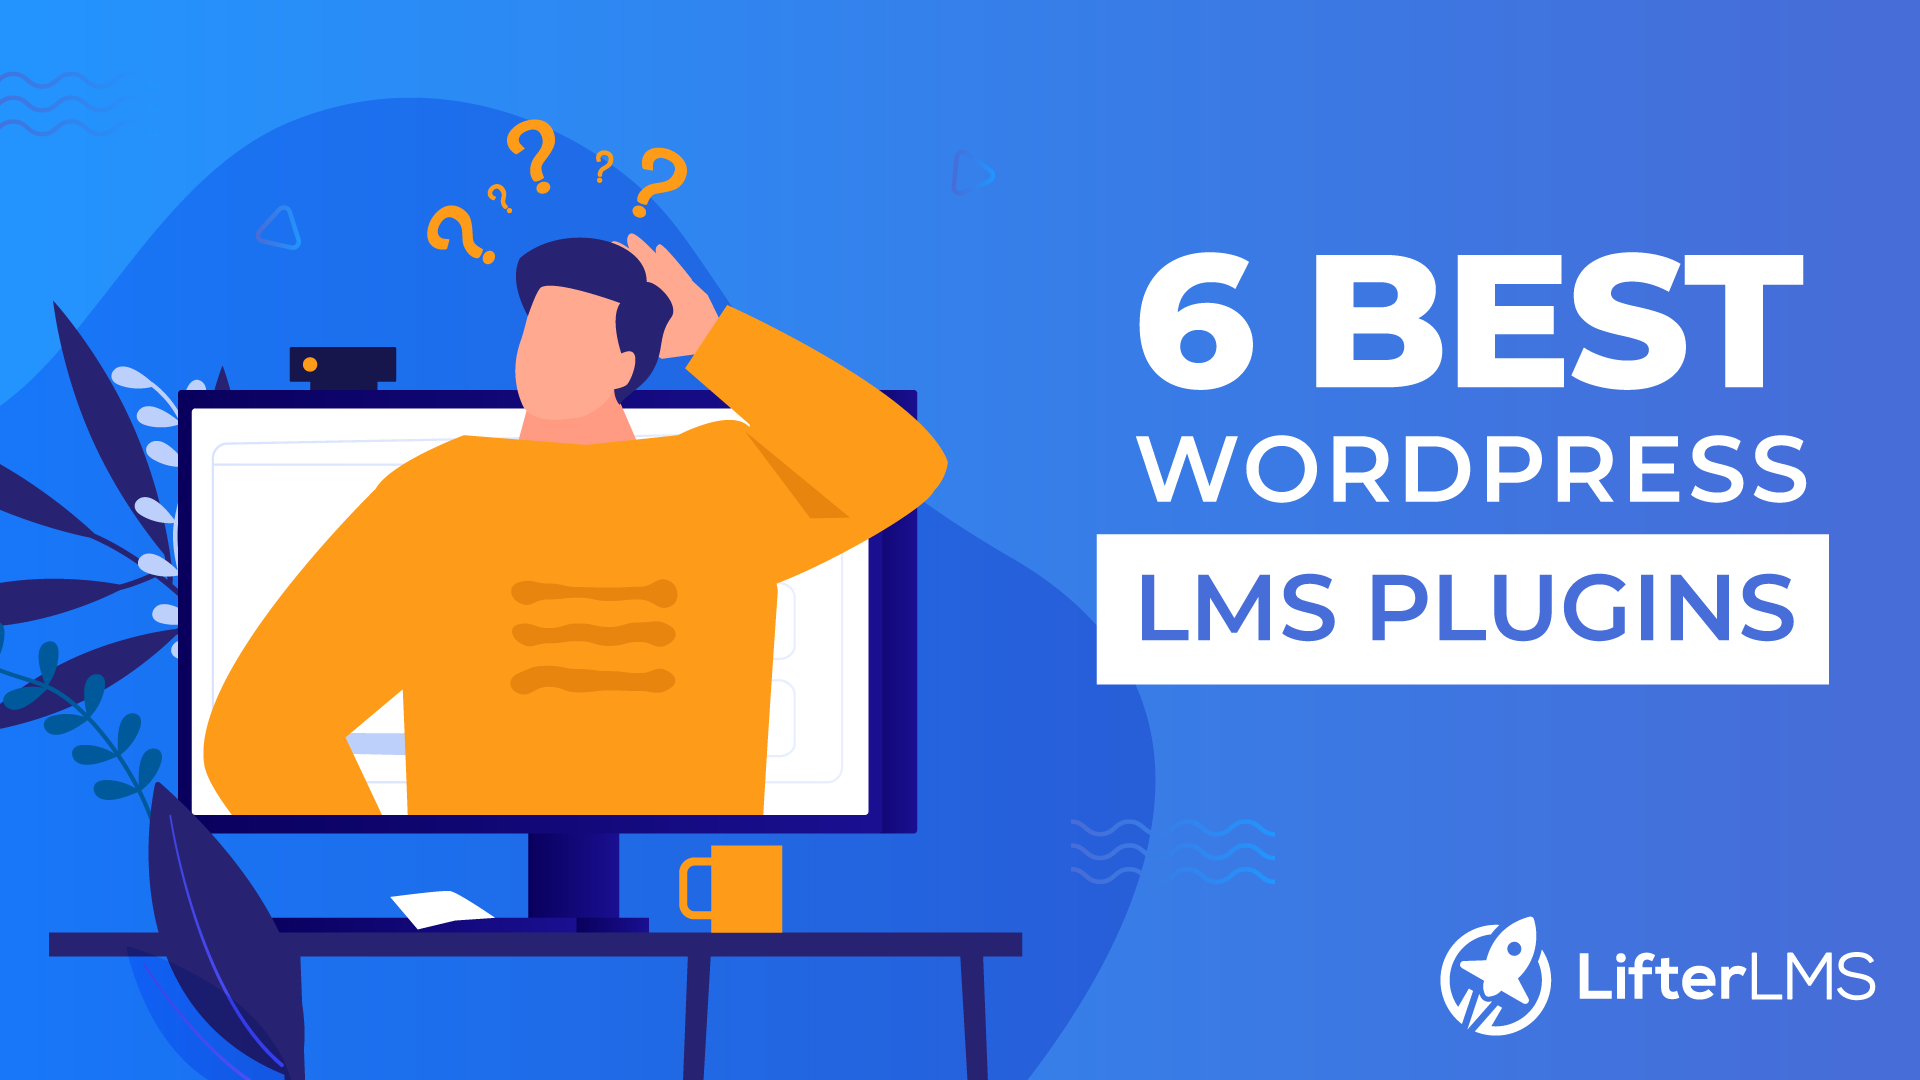 Best WordPress LMS plugins LifterLMS